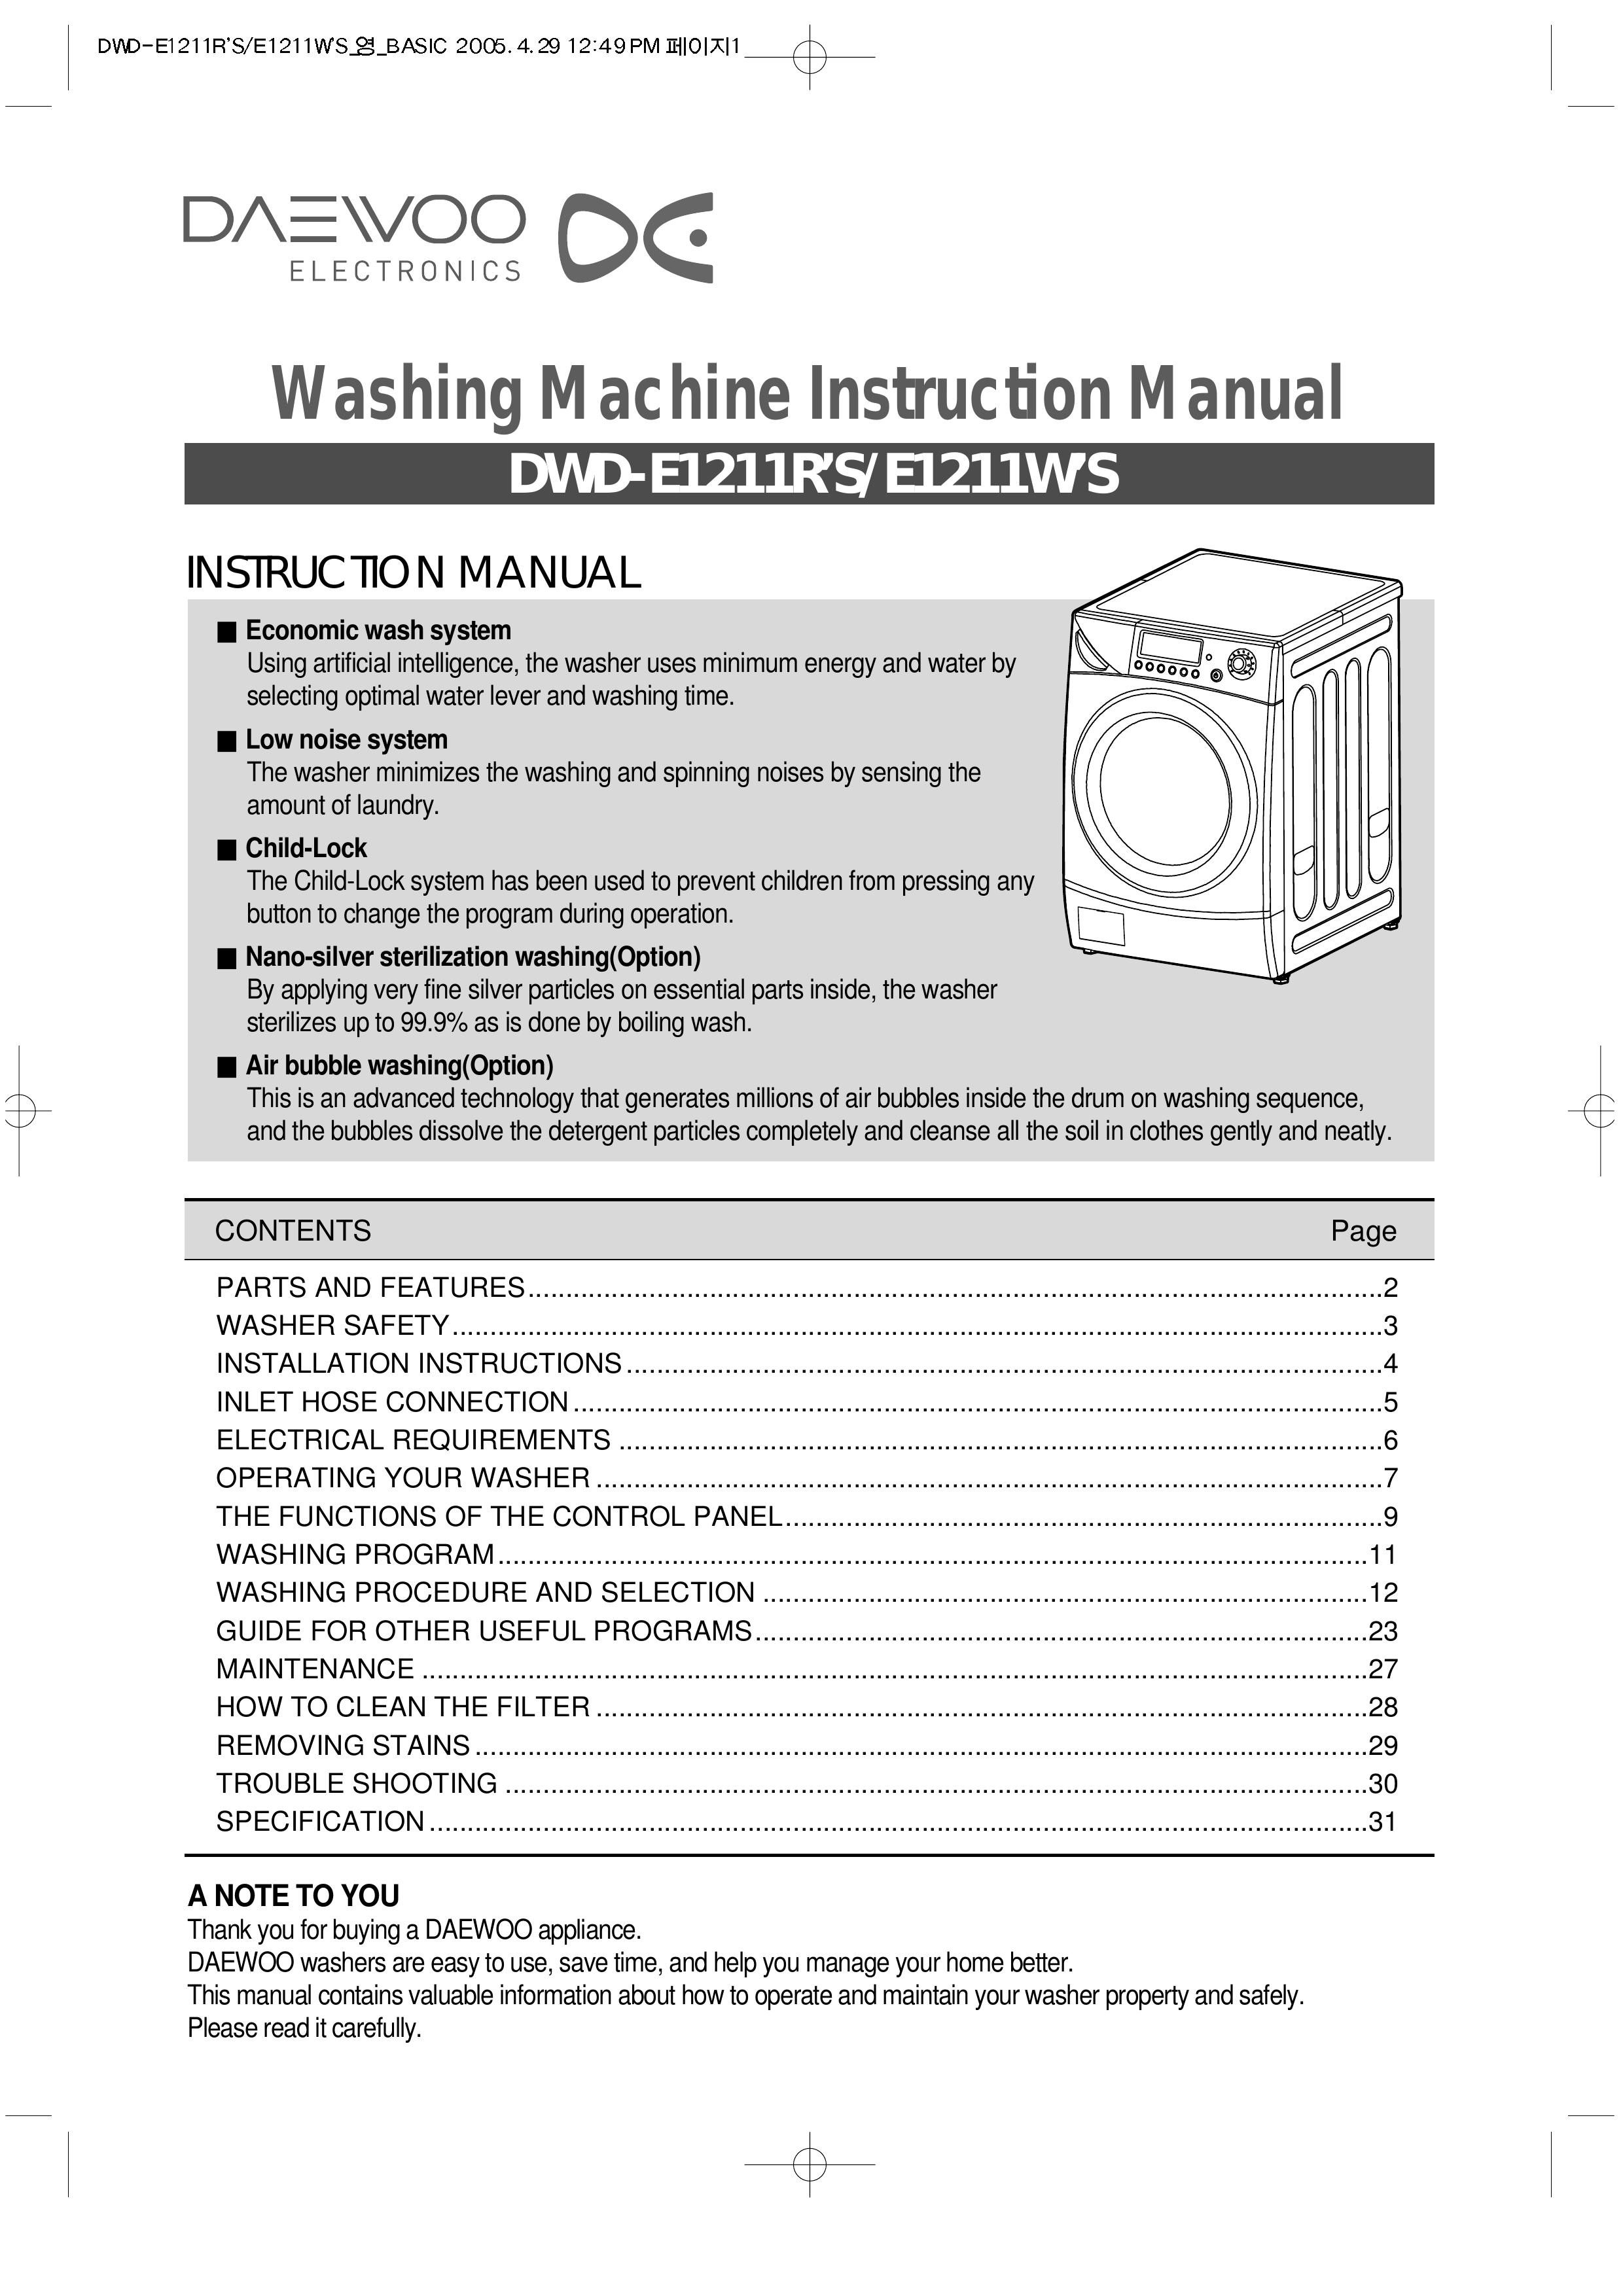 Daewoo DWD-E1211R'S Washer User Manual